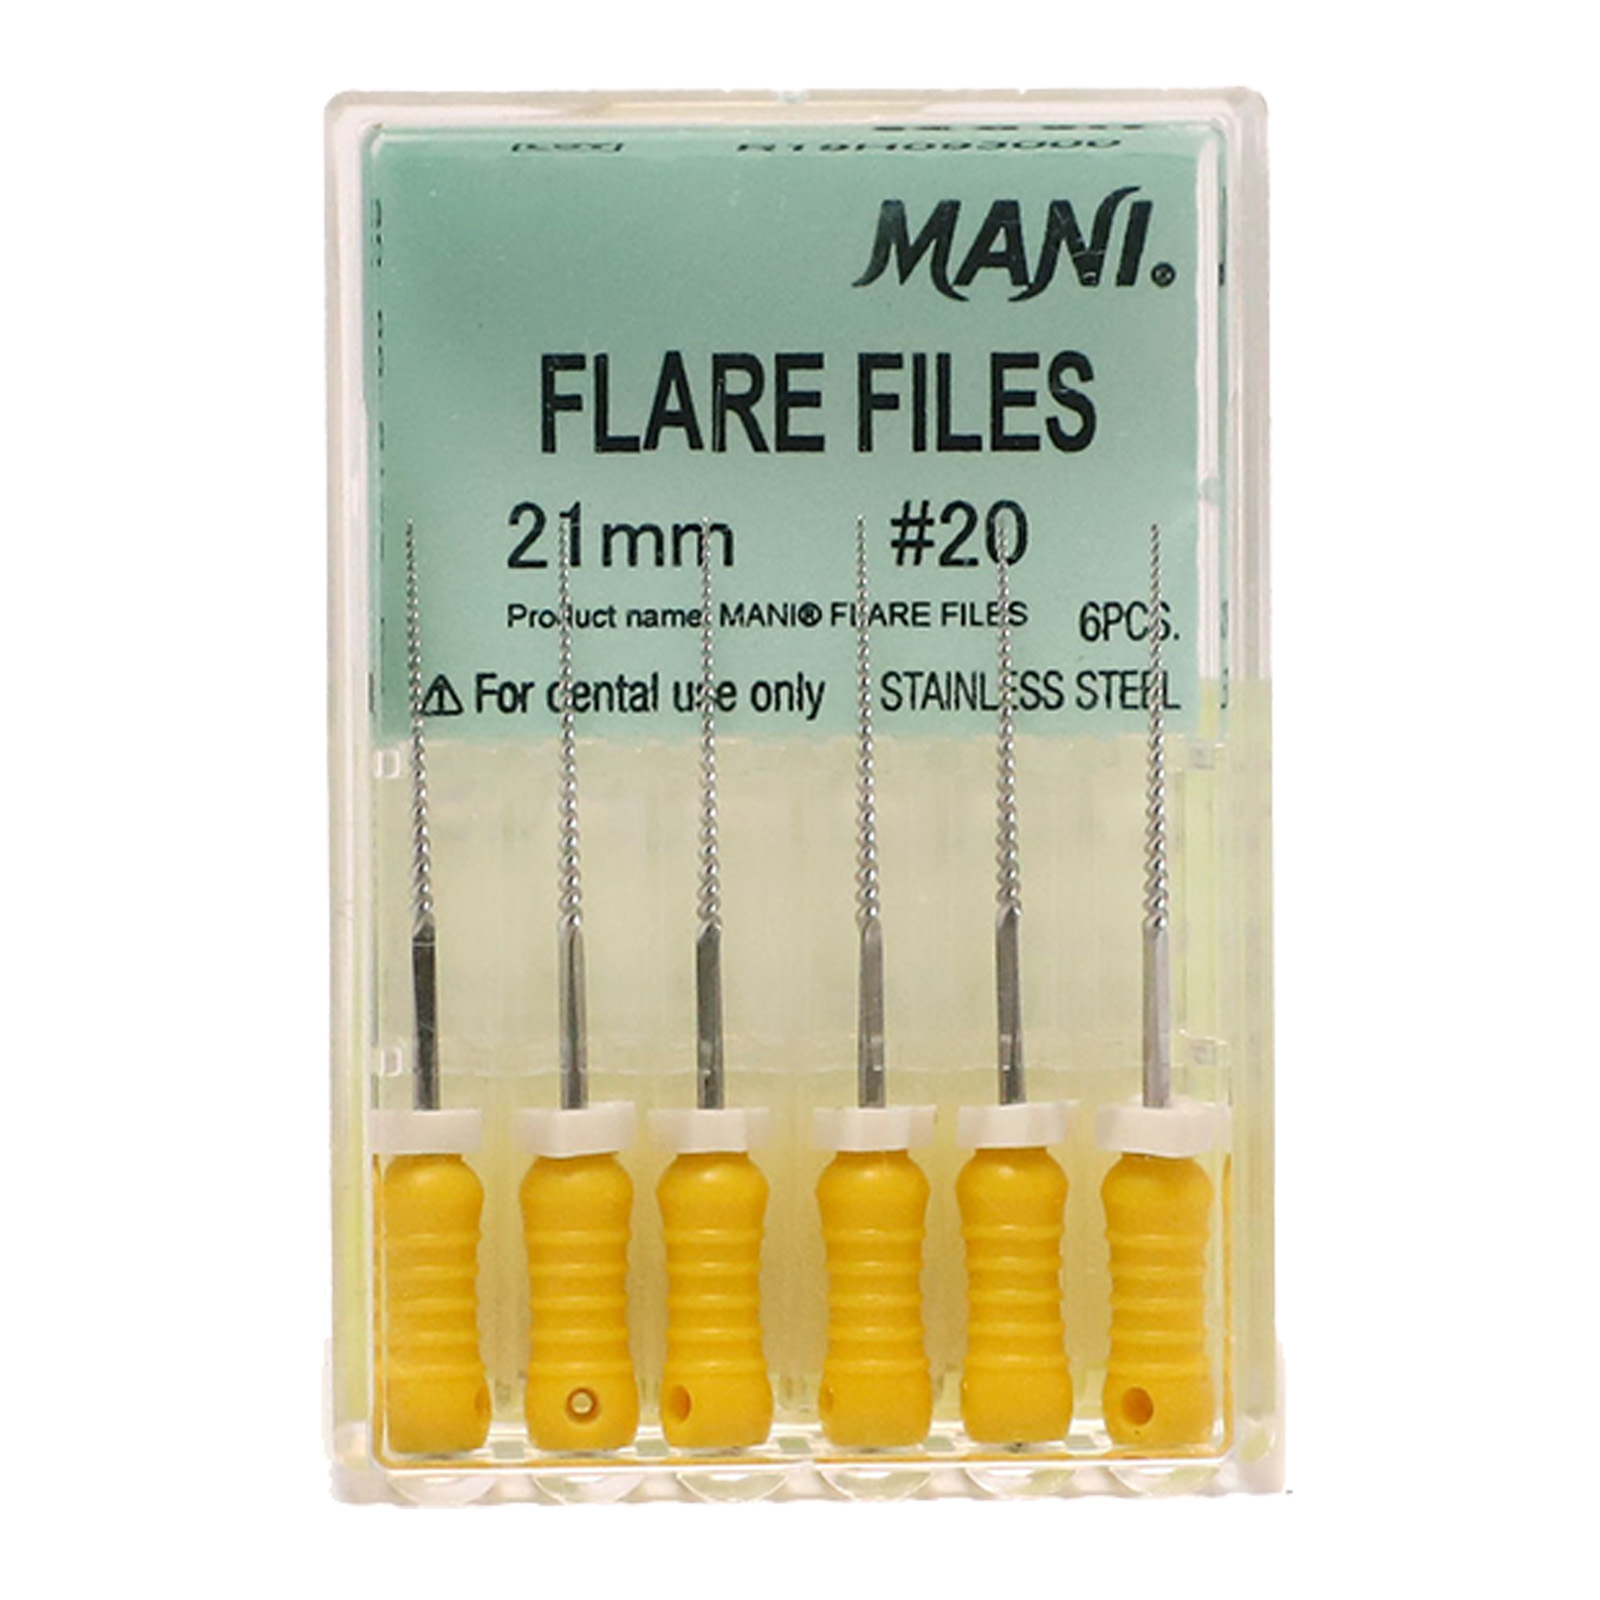 Mani Flare Files #20 21mm